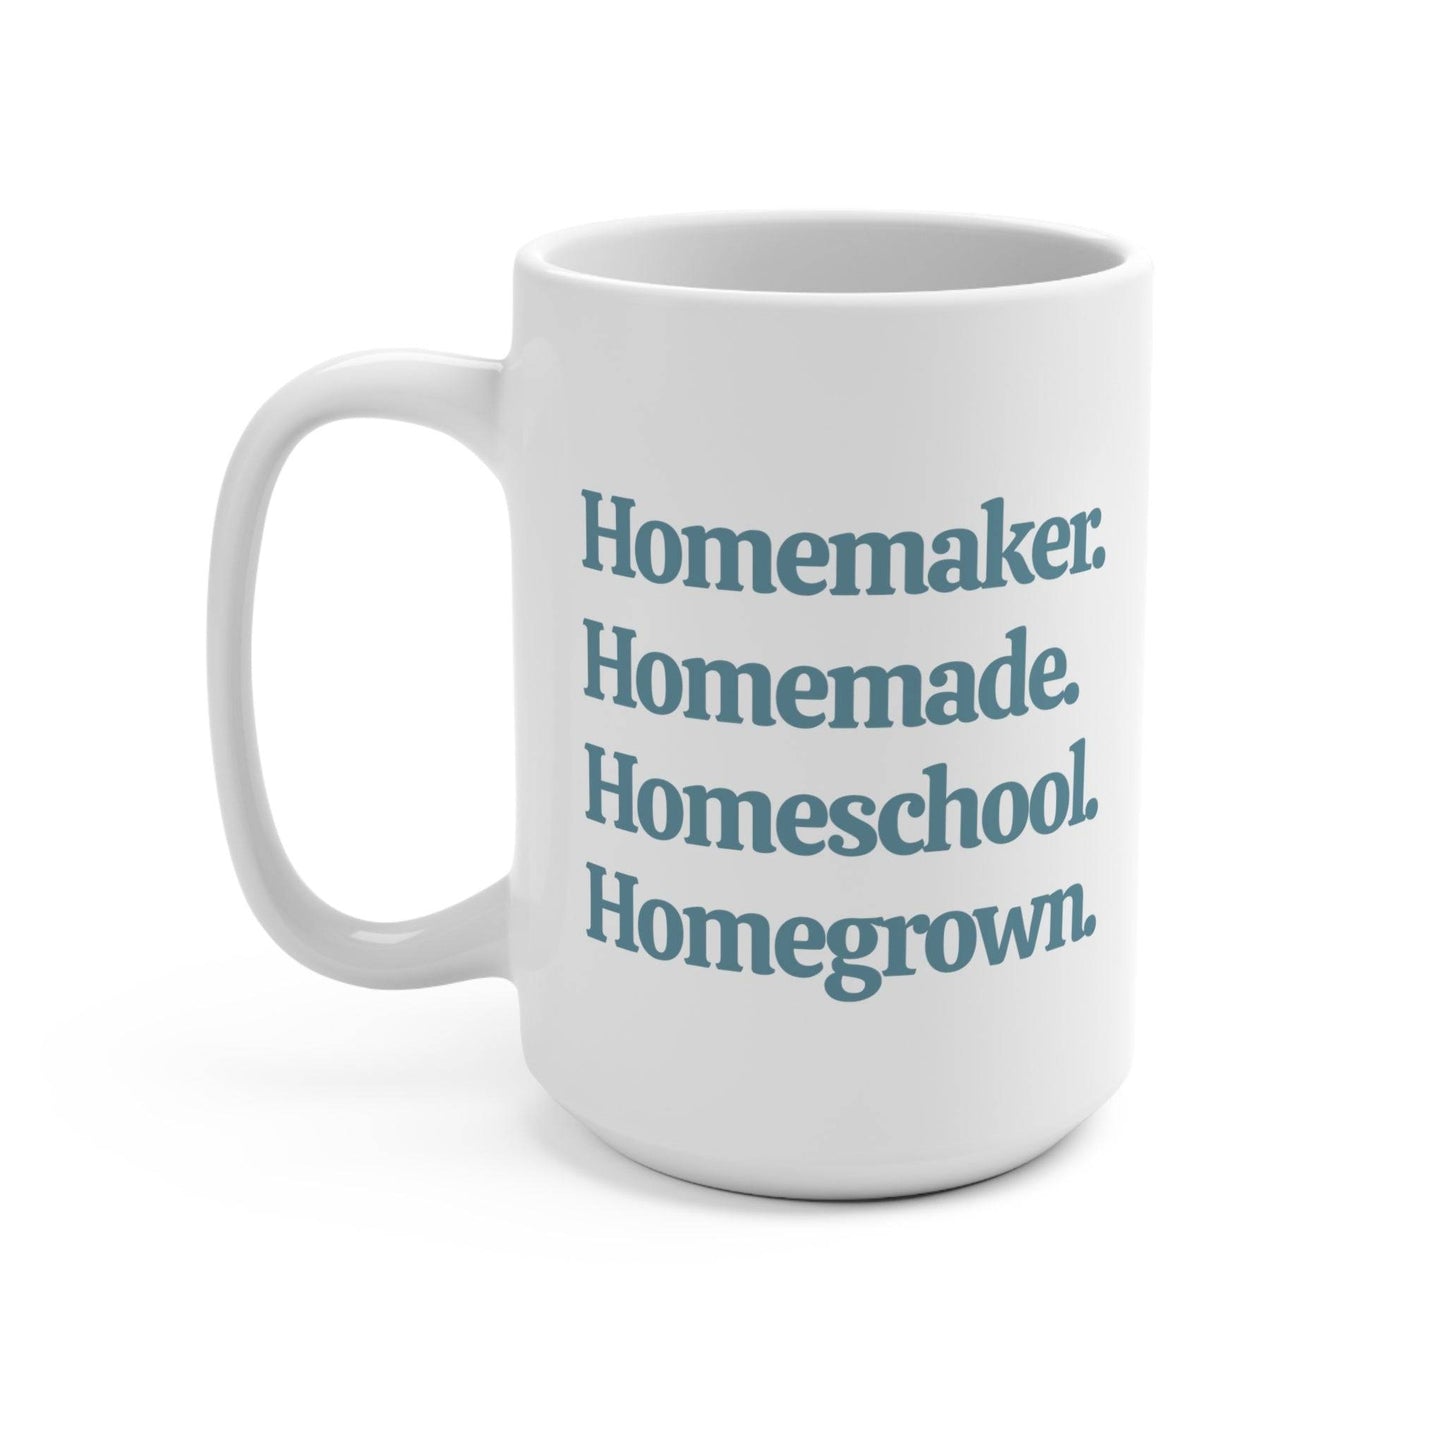 Homemaker. Homemade. Homeschool. Homegrown. Mug 15oz